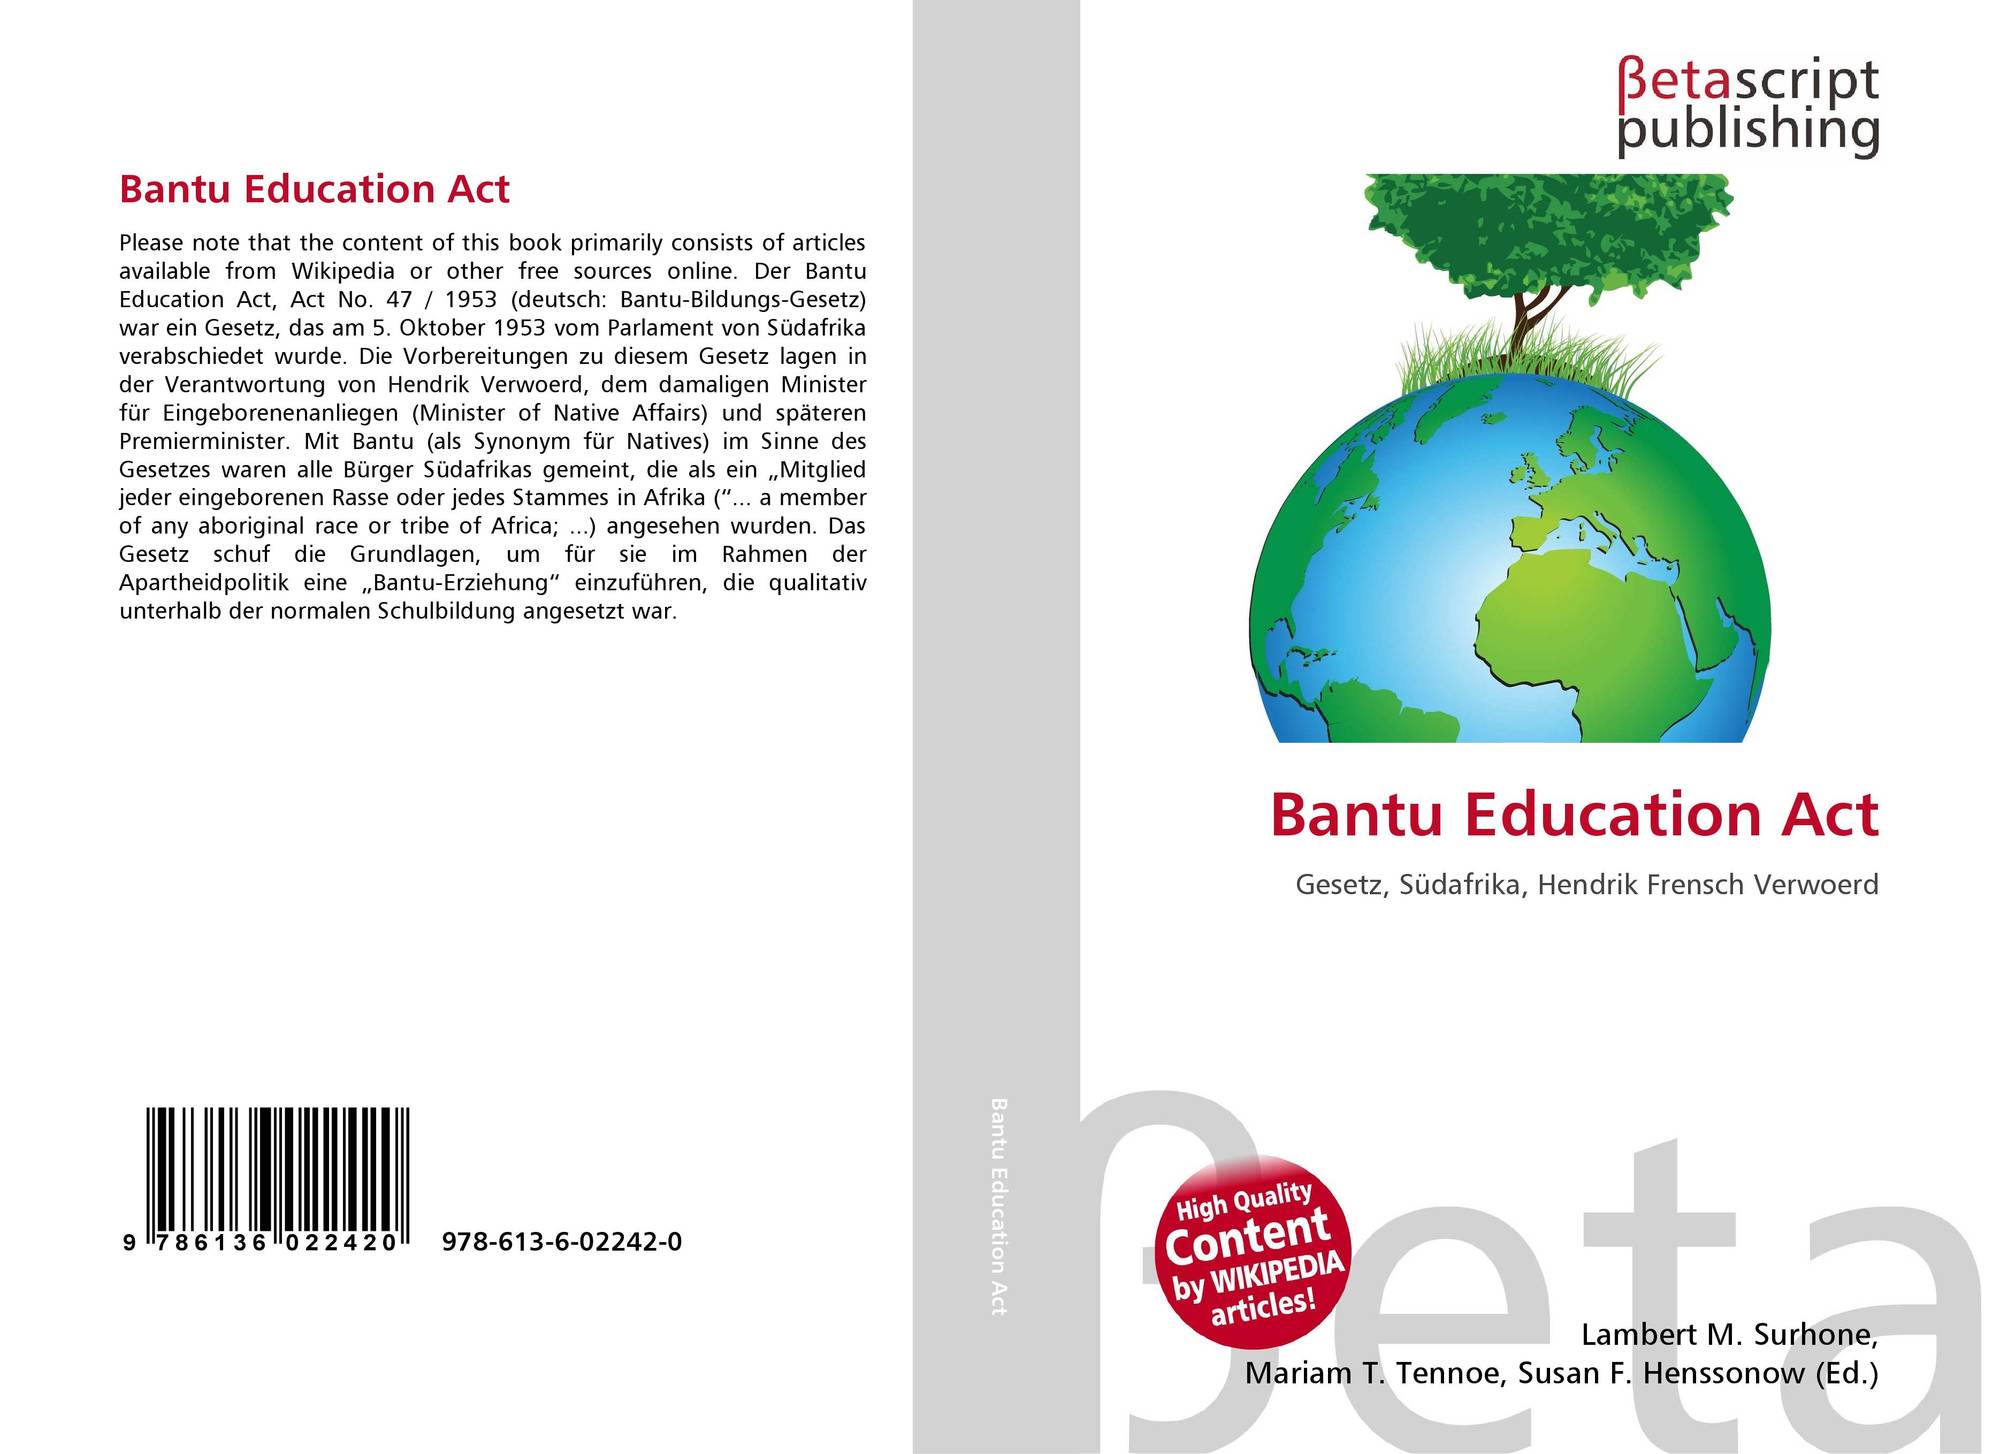 write a bibliography of bantu education act pdf